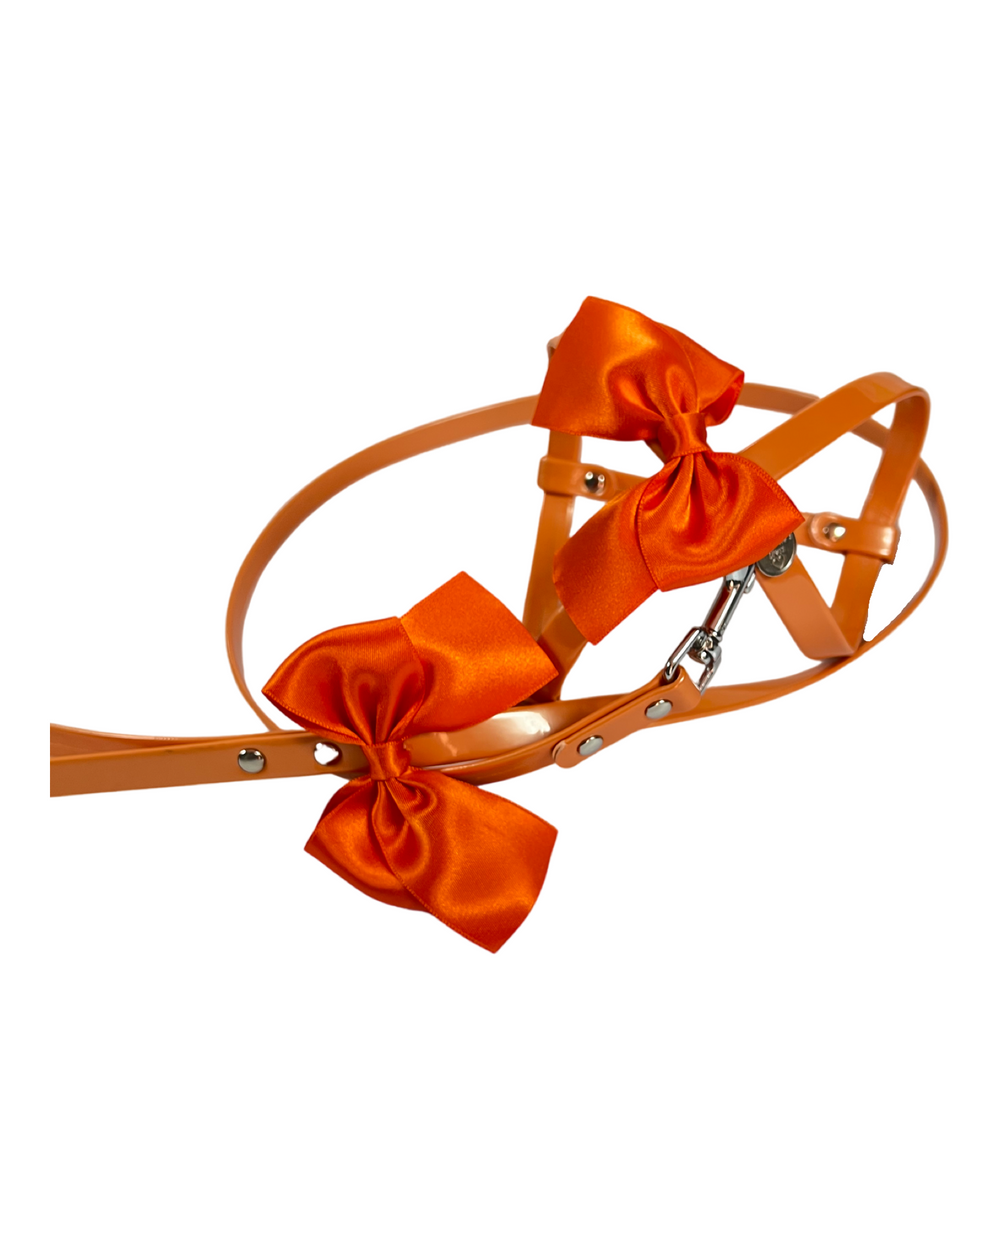 Fashion Dog Harness and Leash Set - Orange Bow